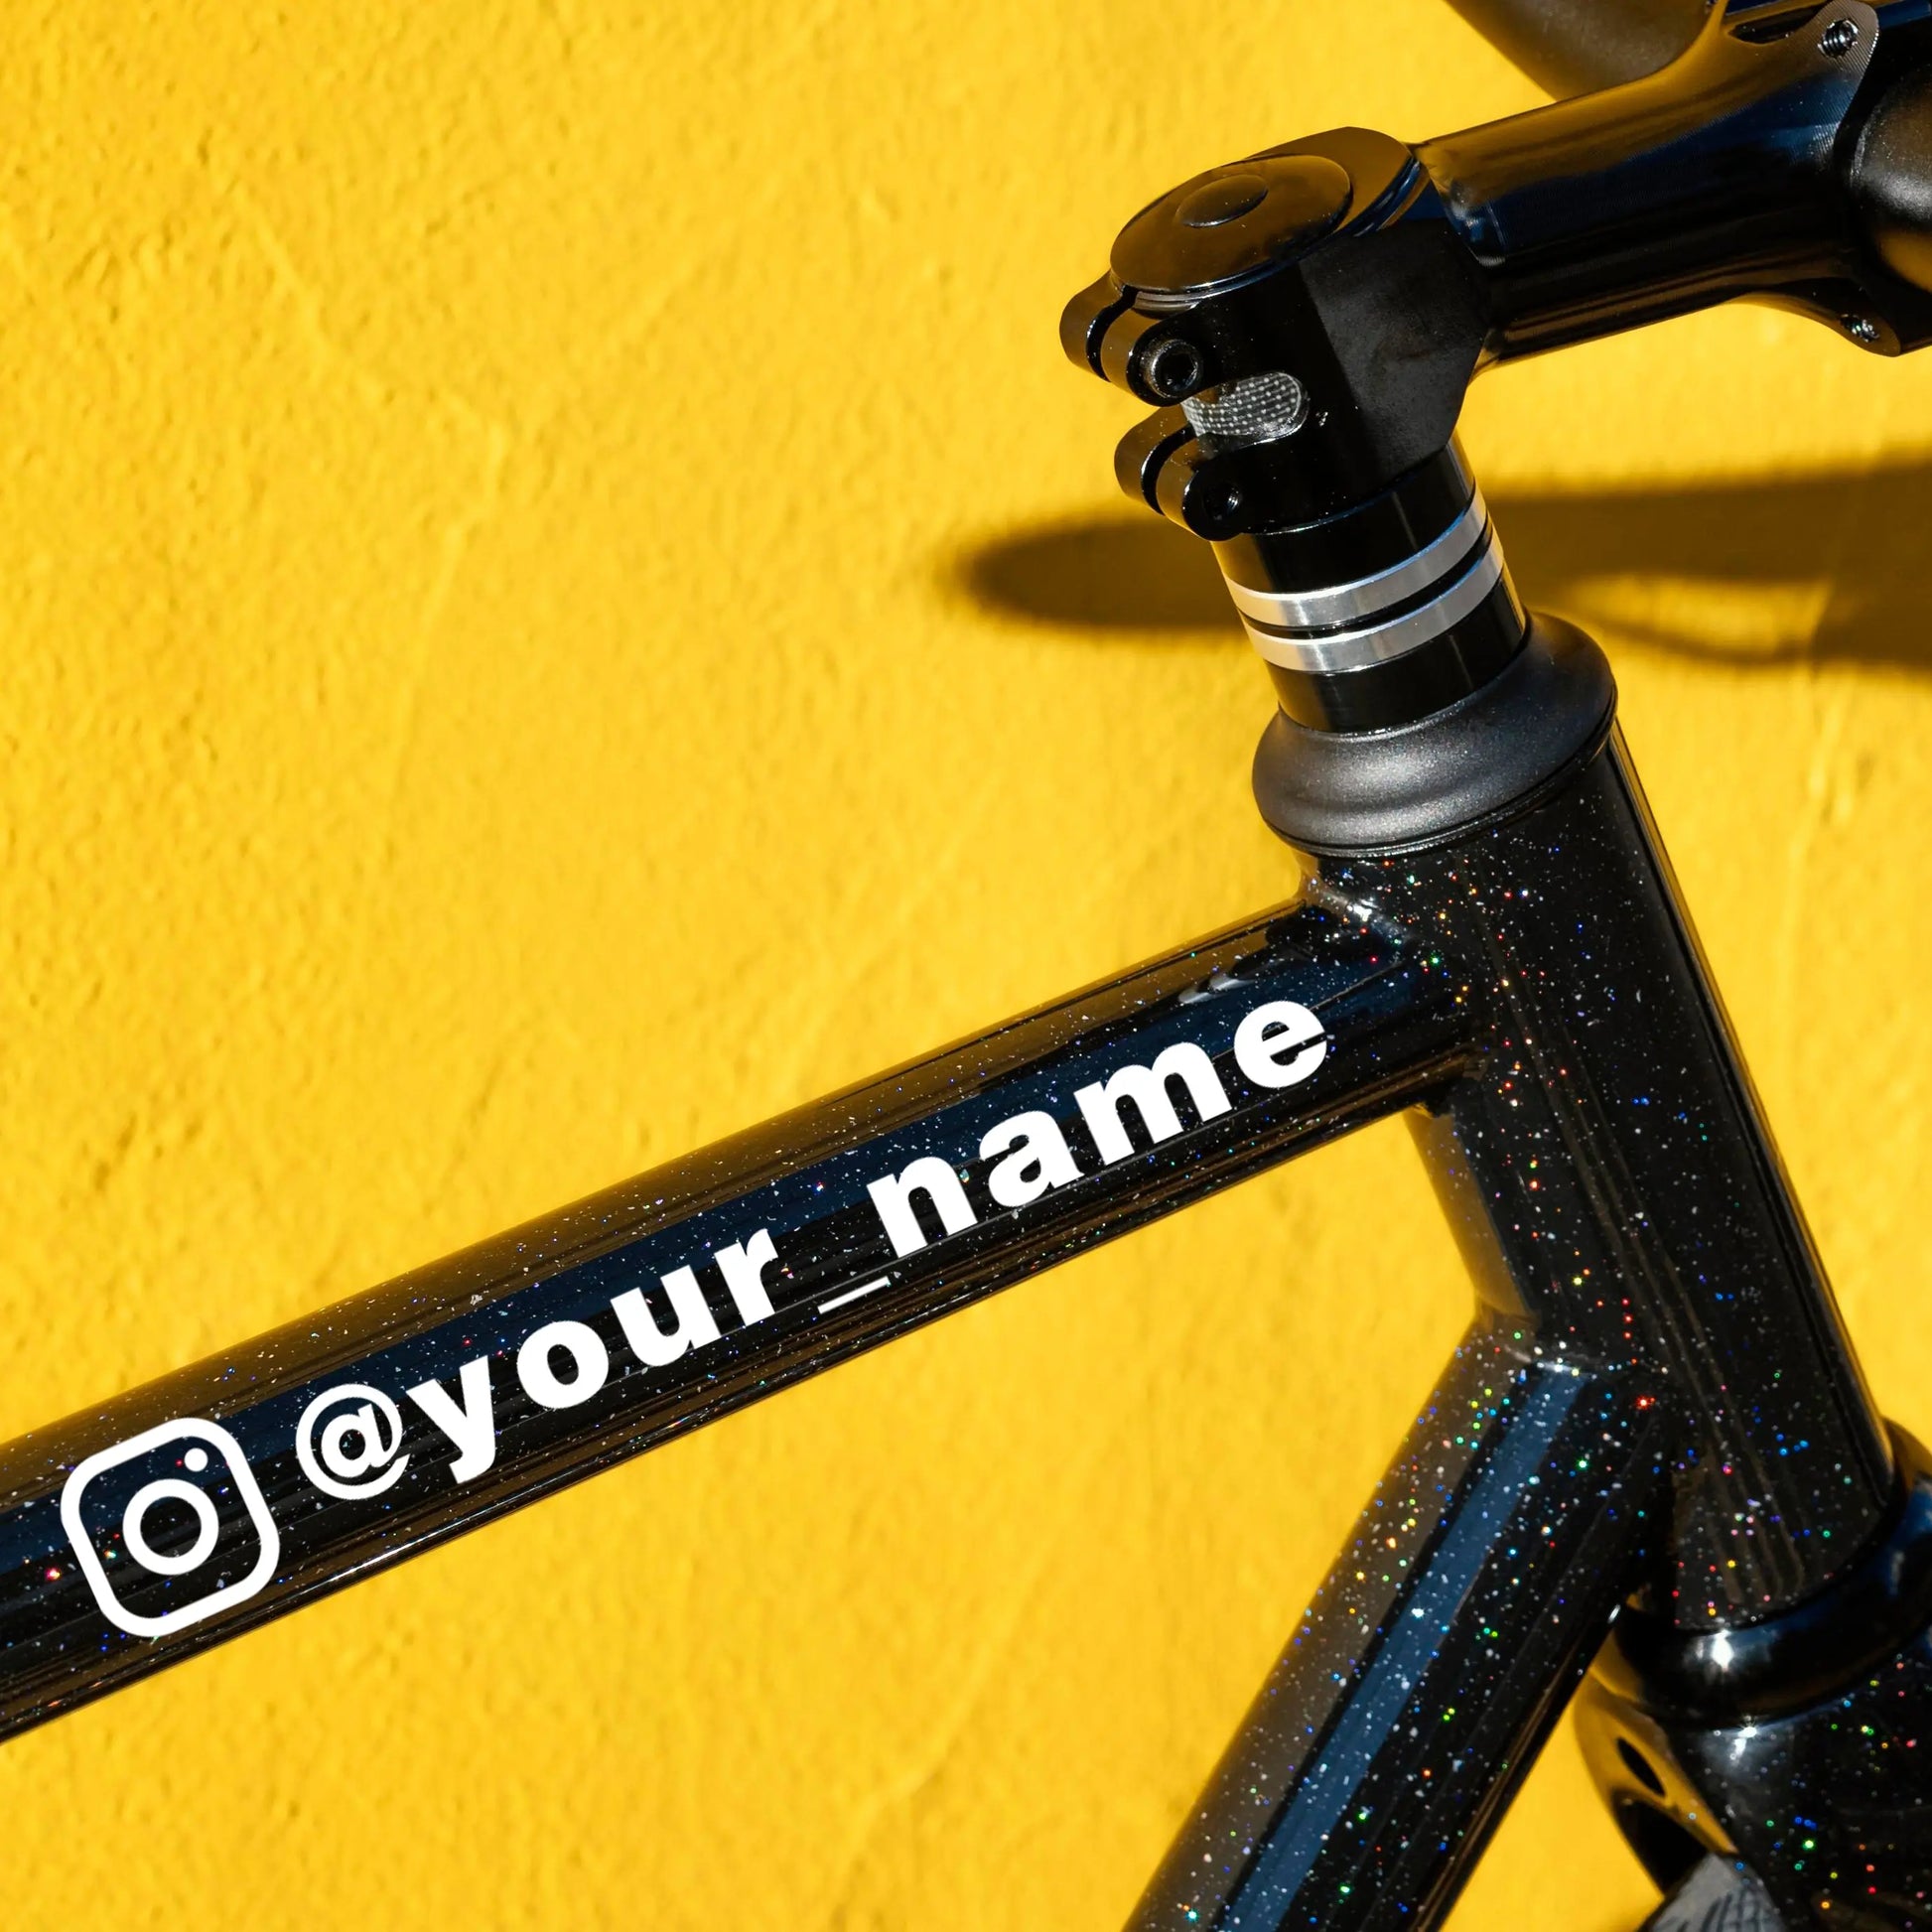 custom social media @ tag weatherproof vinyl decal stickers stuck on a bike frame